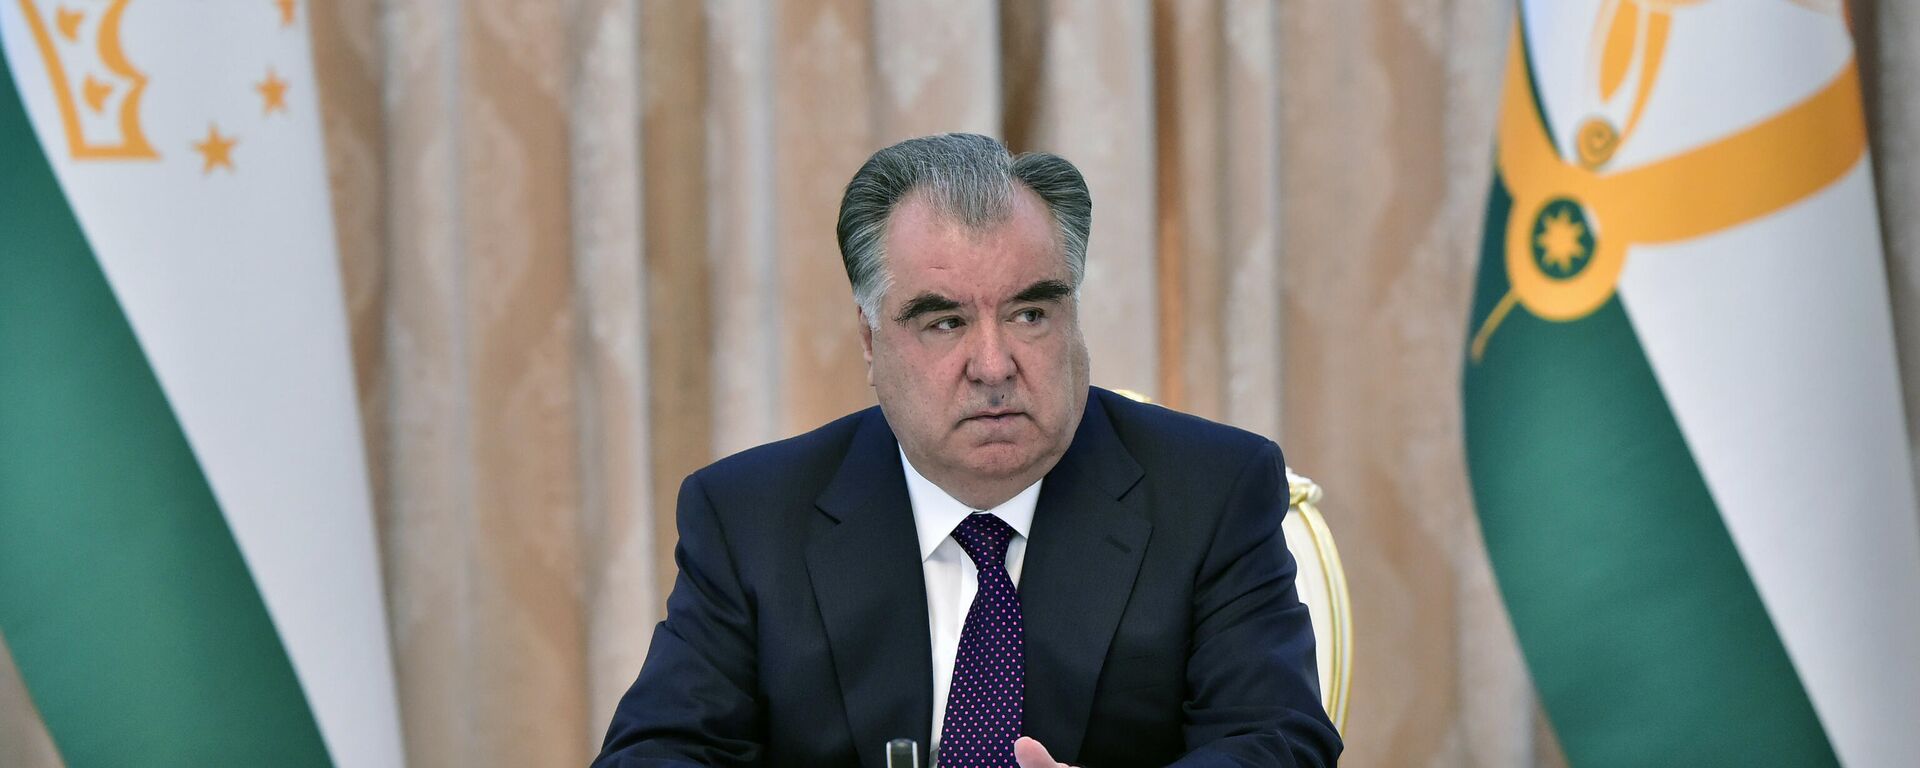 Президент Республики Таджикистан Эмомали Рахмон - Sputnik Таджикистан, 1920, 25.08.2021